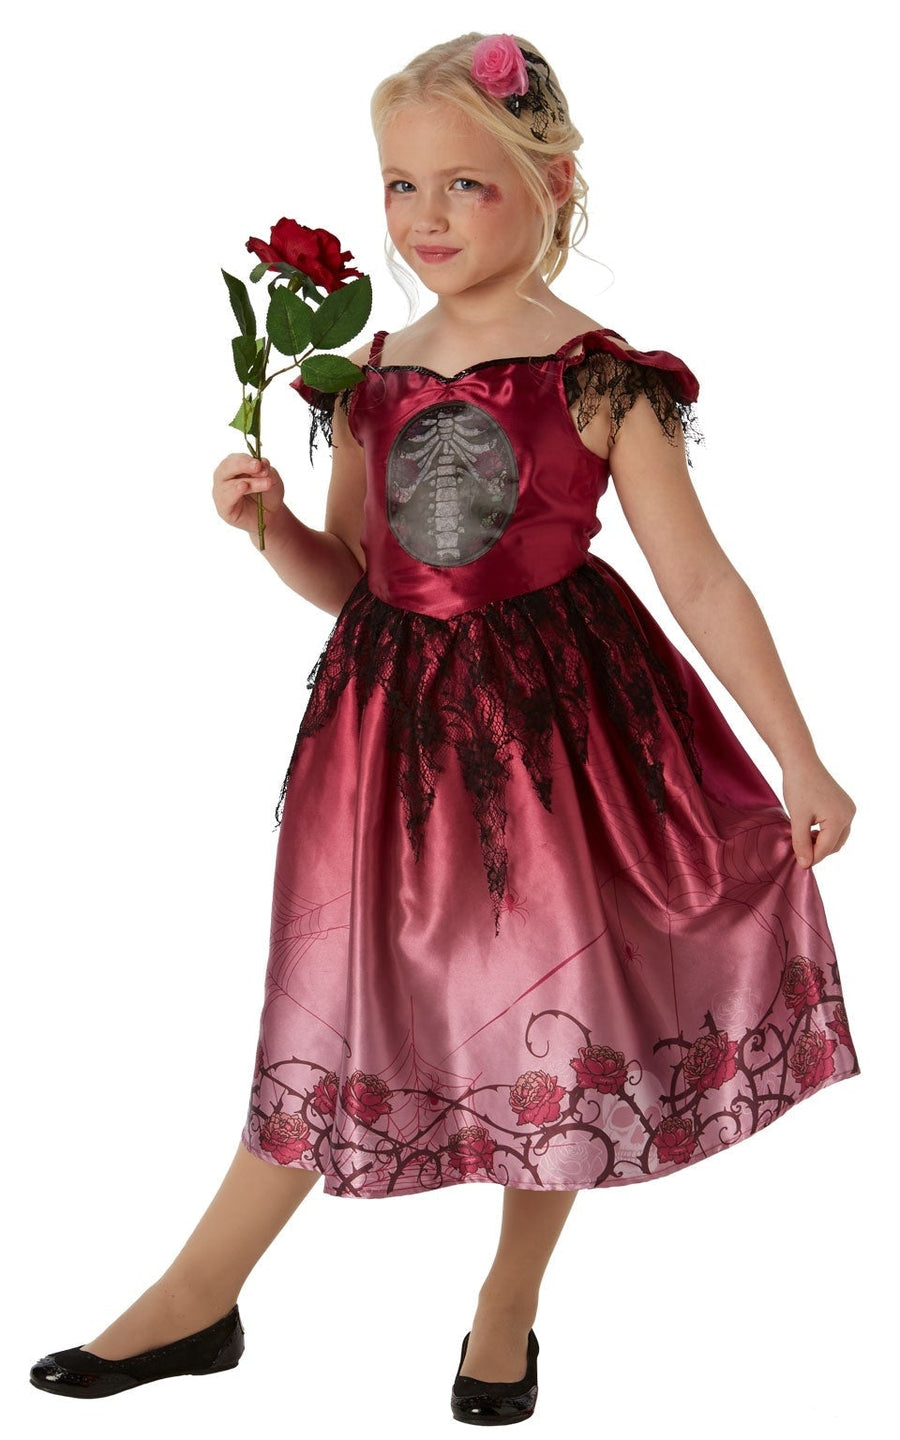 Rags & Roses Costume_1 rub-630706L